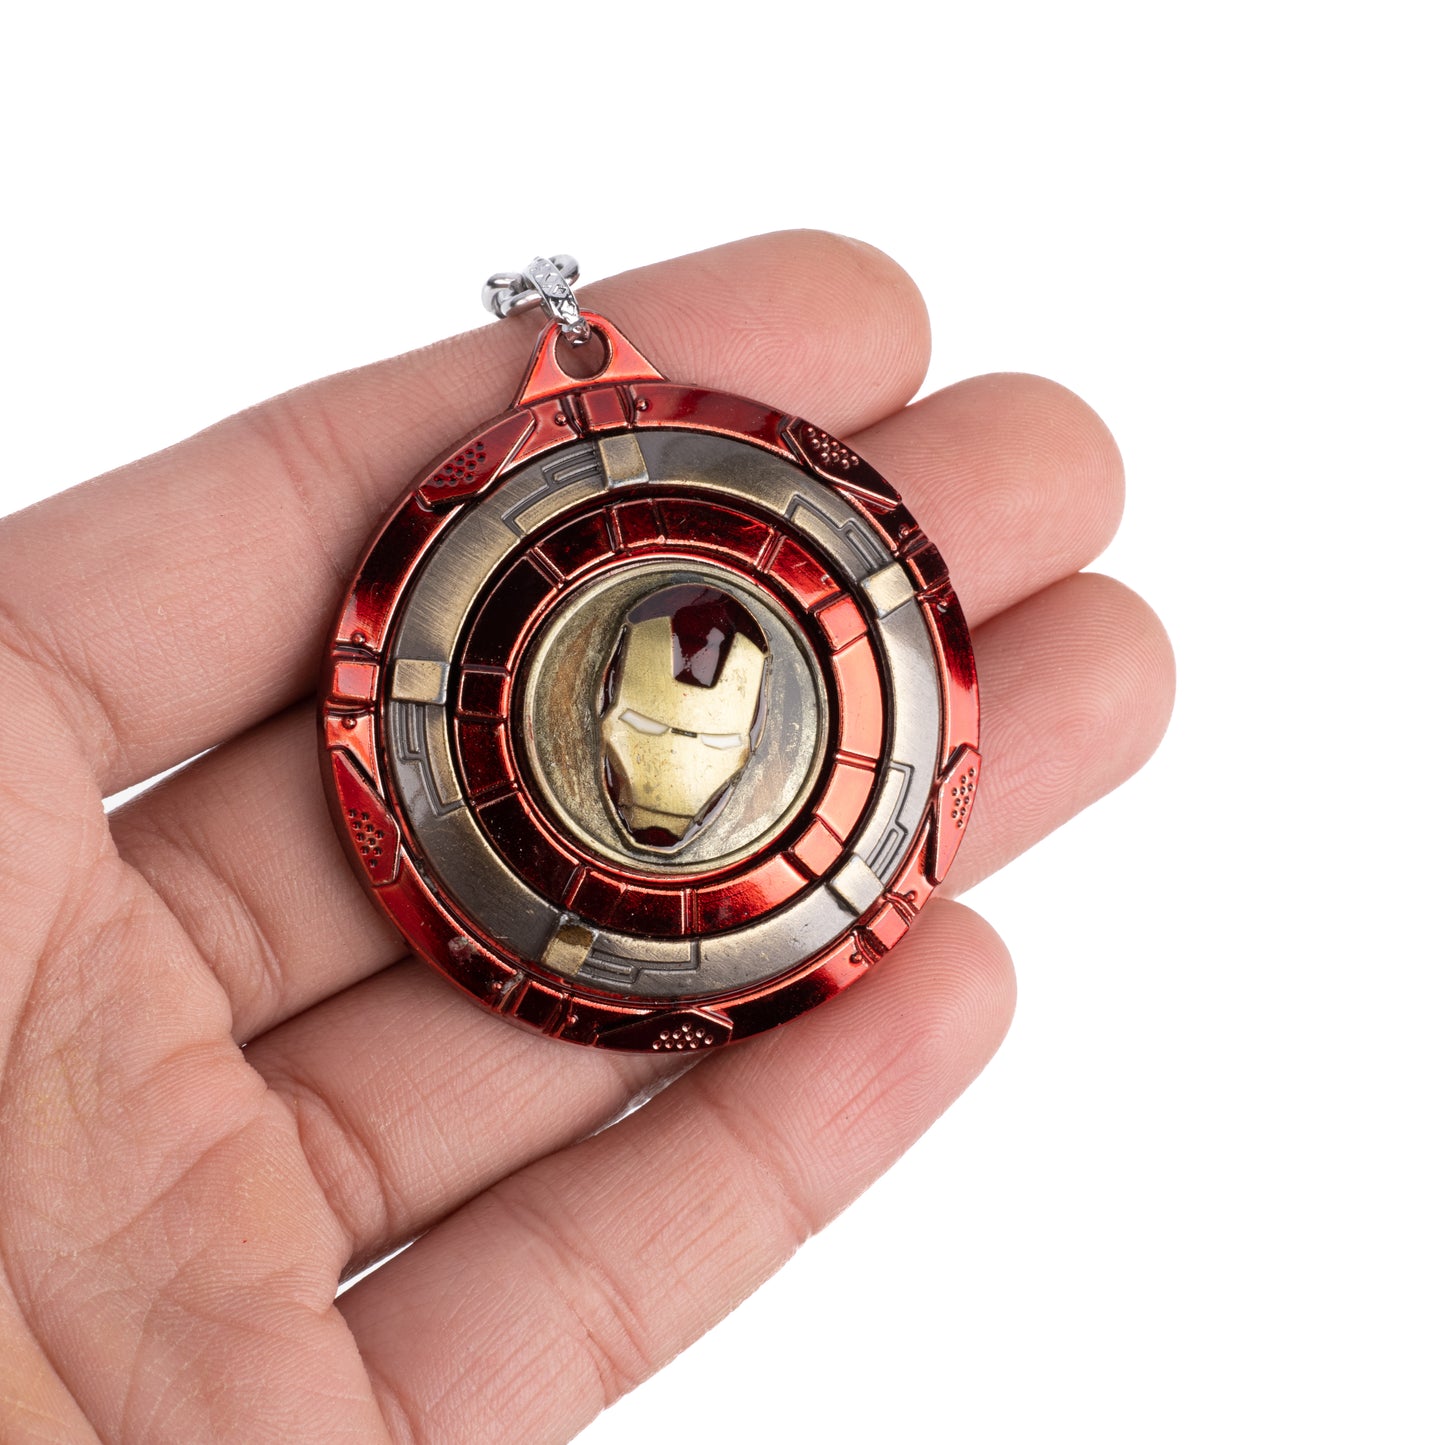 Basket Bum's Marvelous Motion: Revolving Golden Iron Man Shield Head Metal Keychain